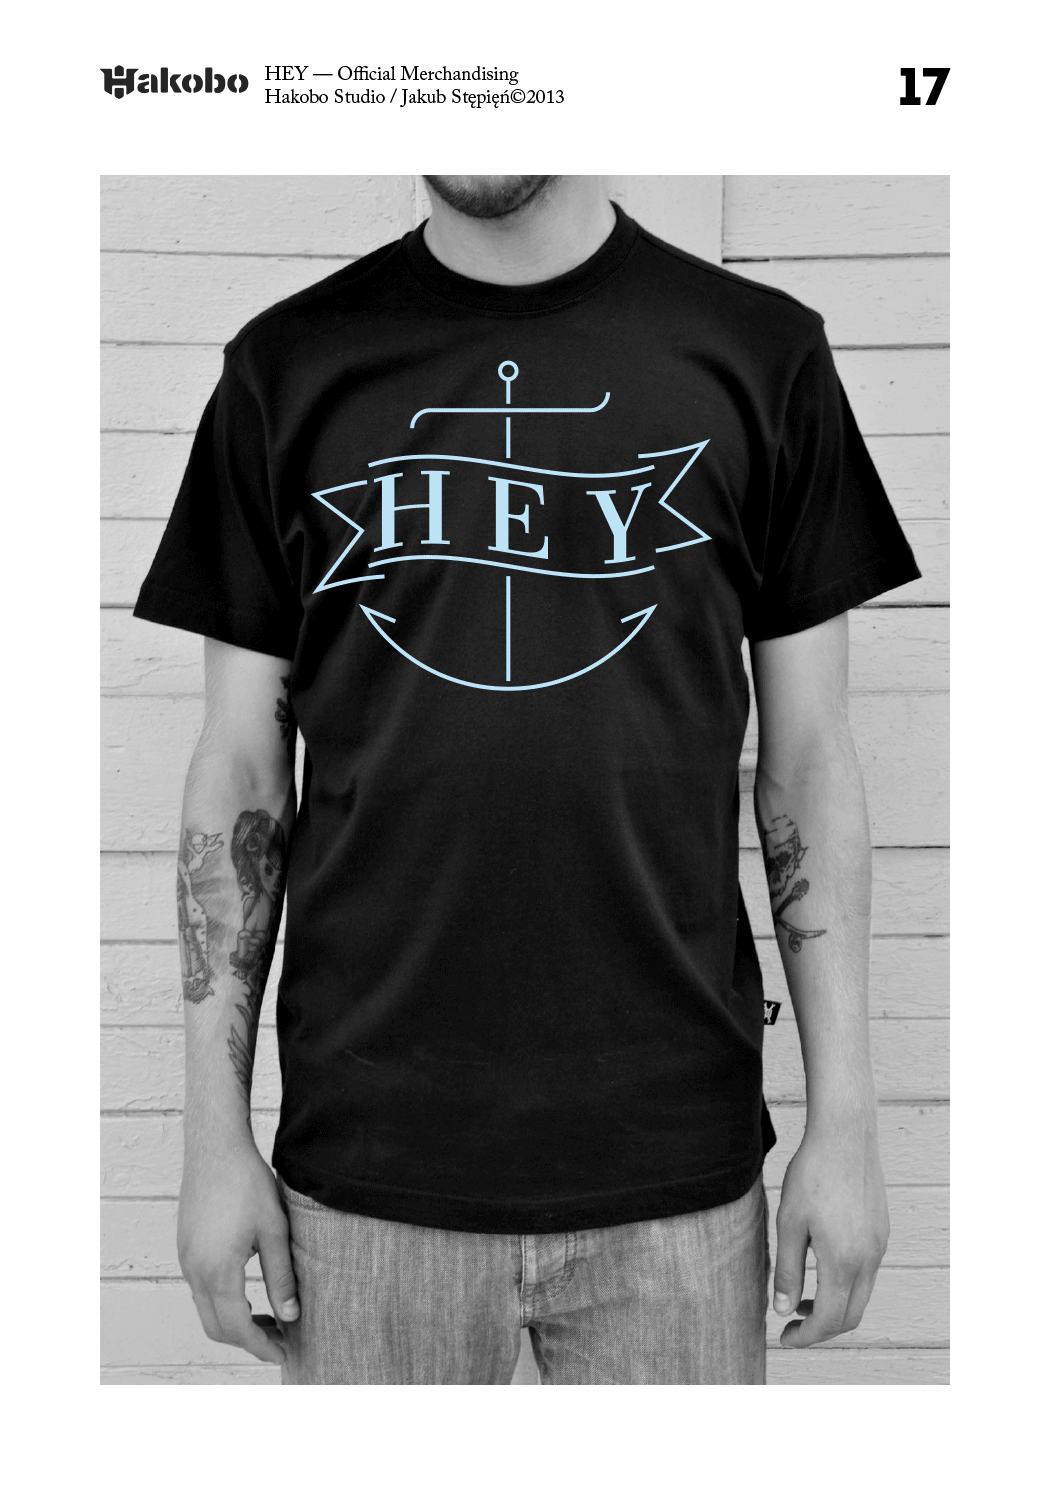 hey-band-merch-hakobo-jakub-stepien-prints-t-shirt-17